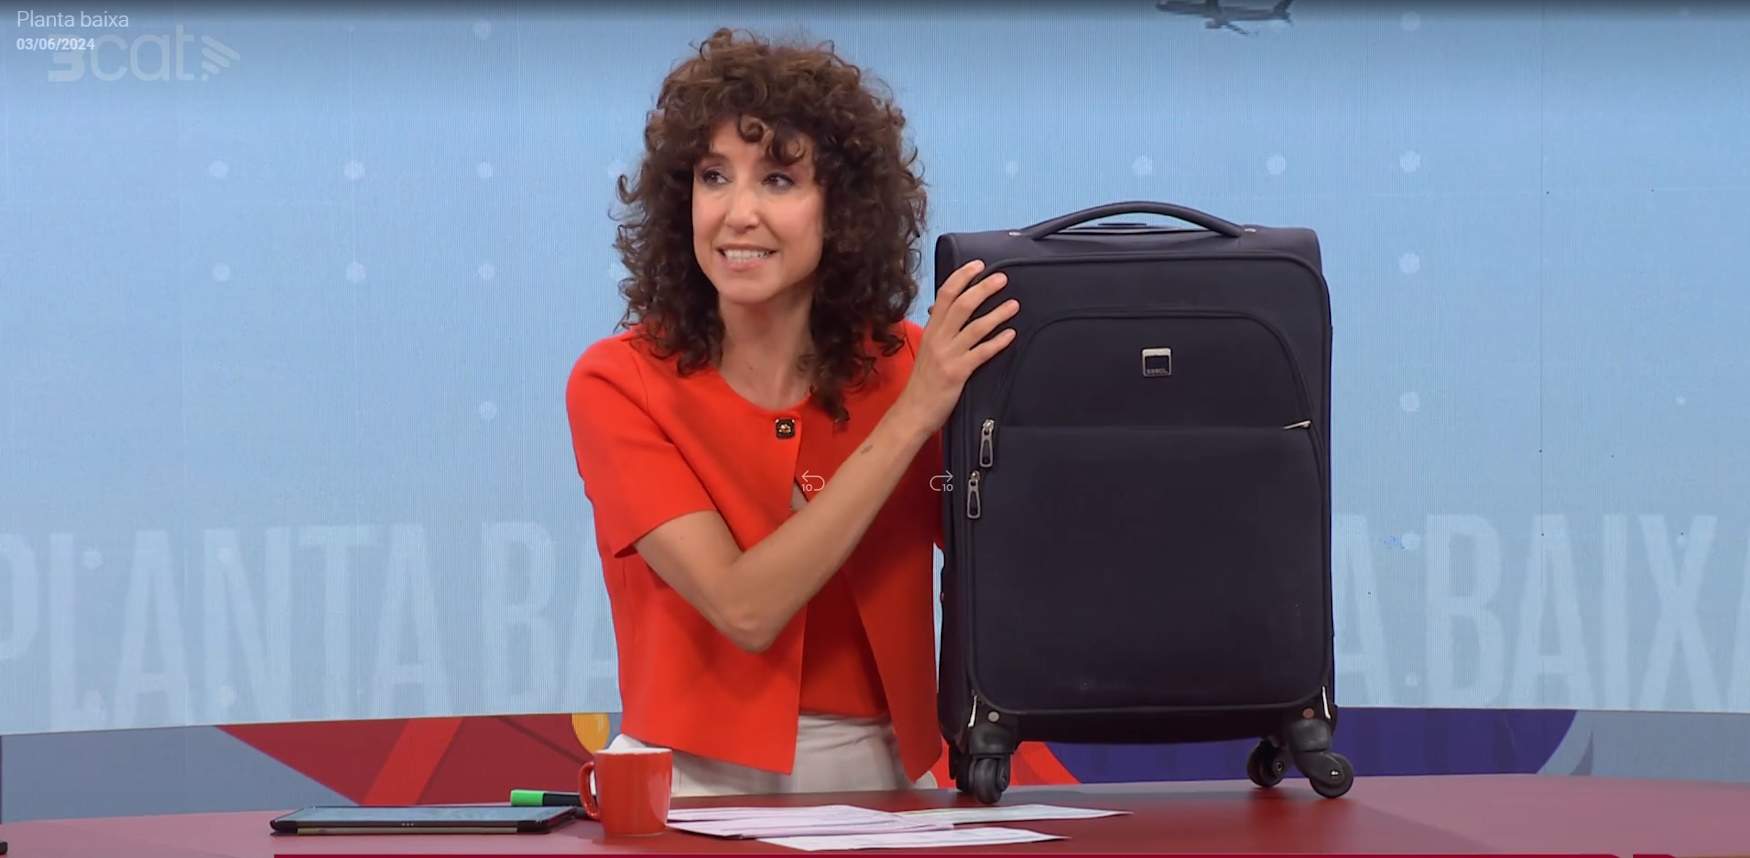 Oficial: TV3 cancela 'Planta baixa', las razones de un adiós, qué hará Agnès Marquès